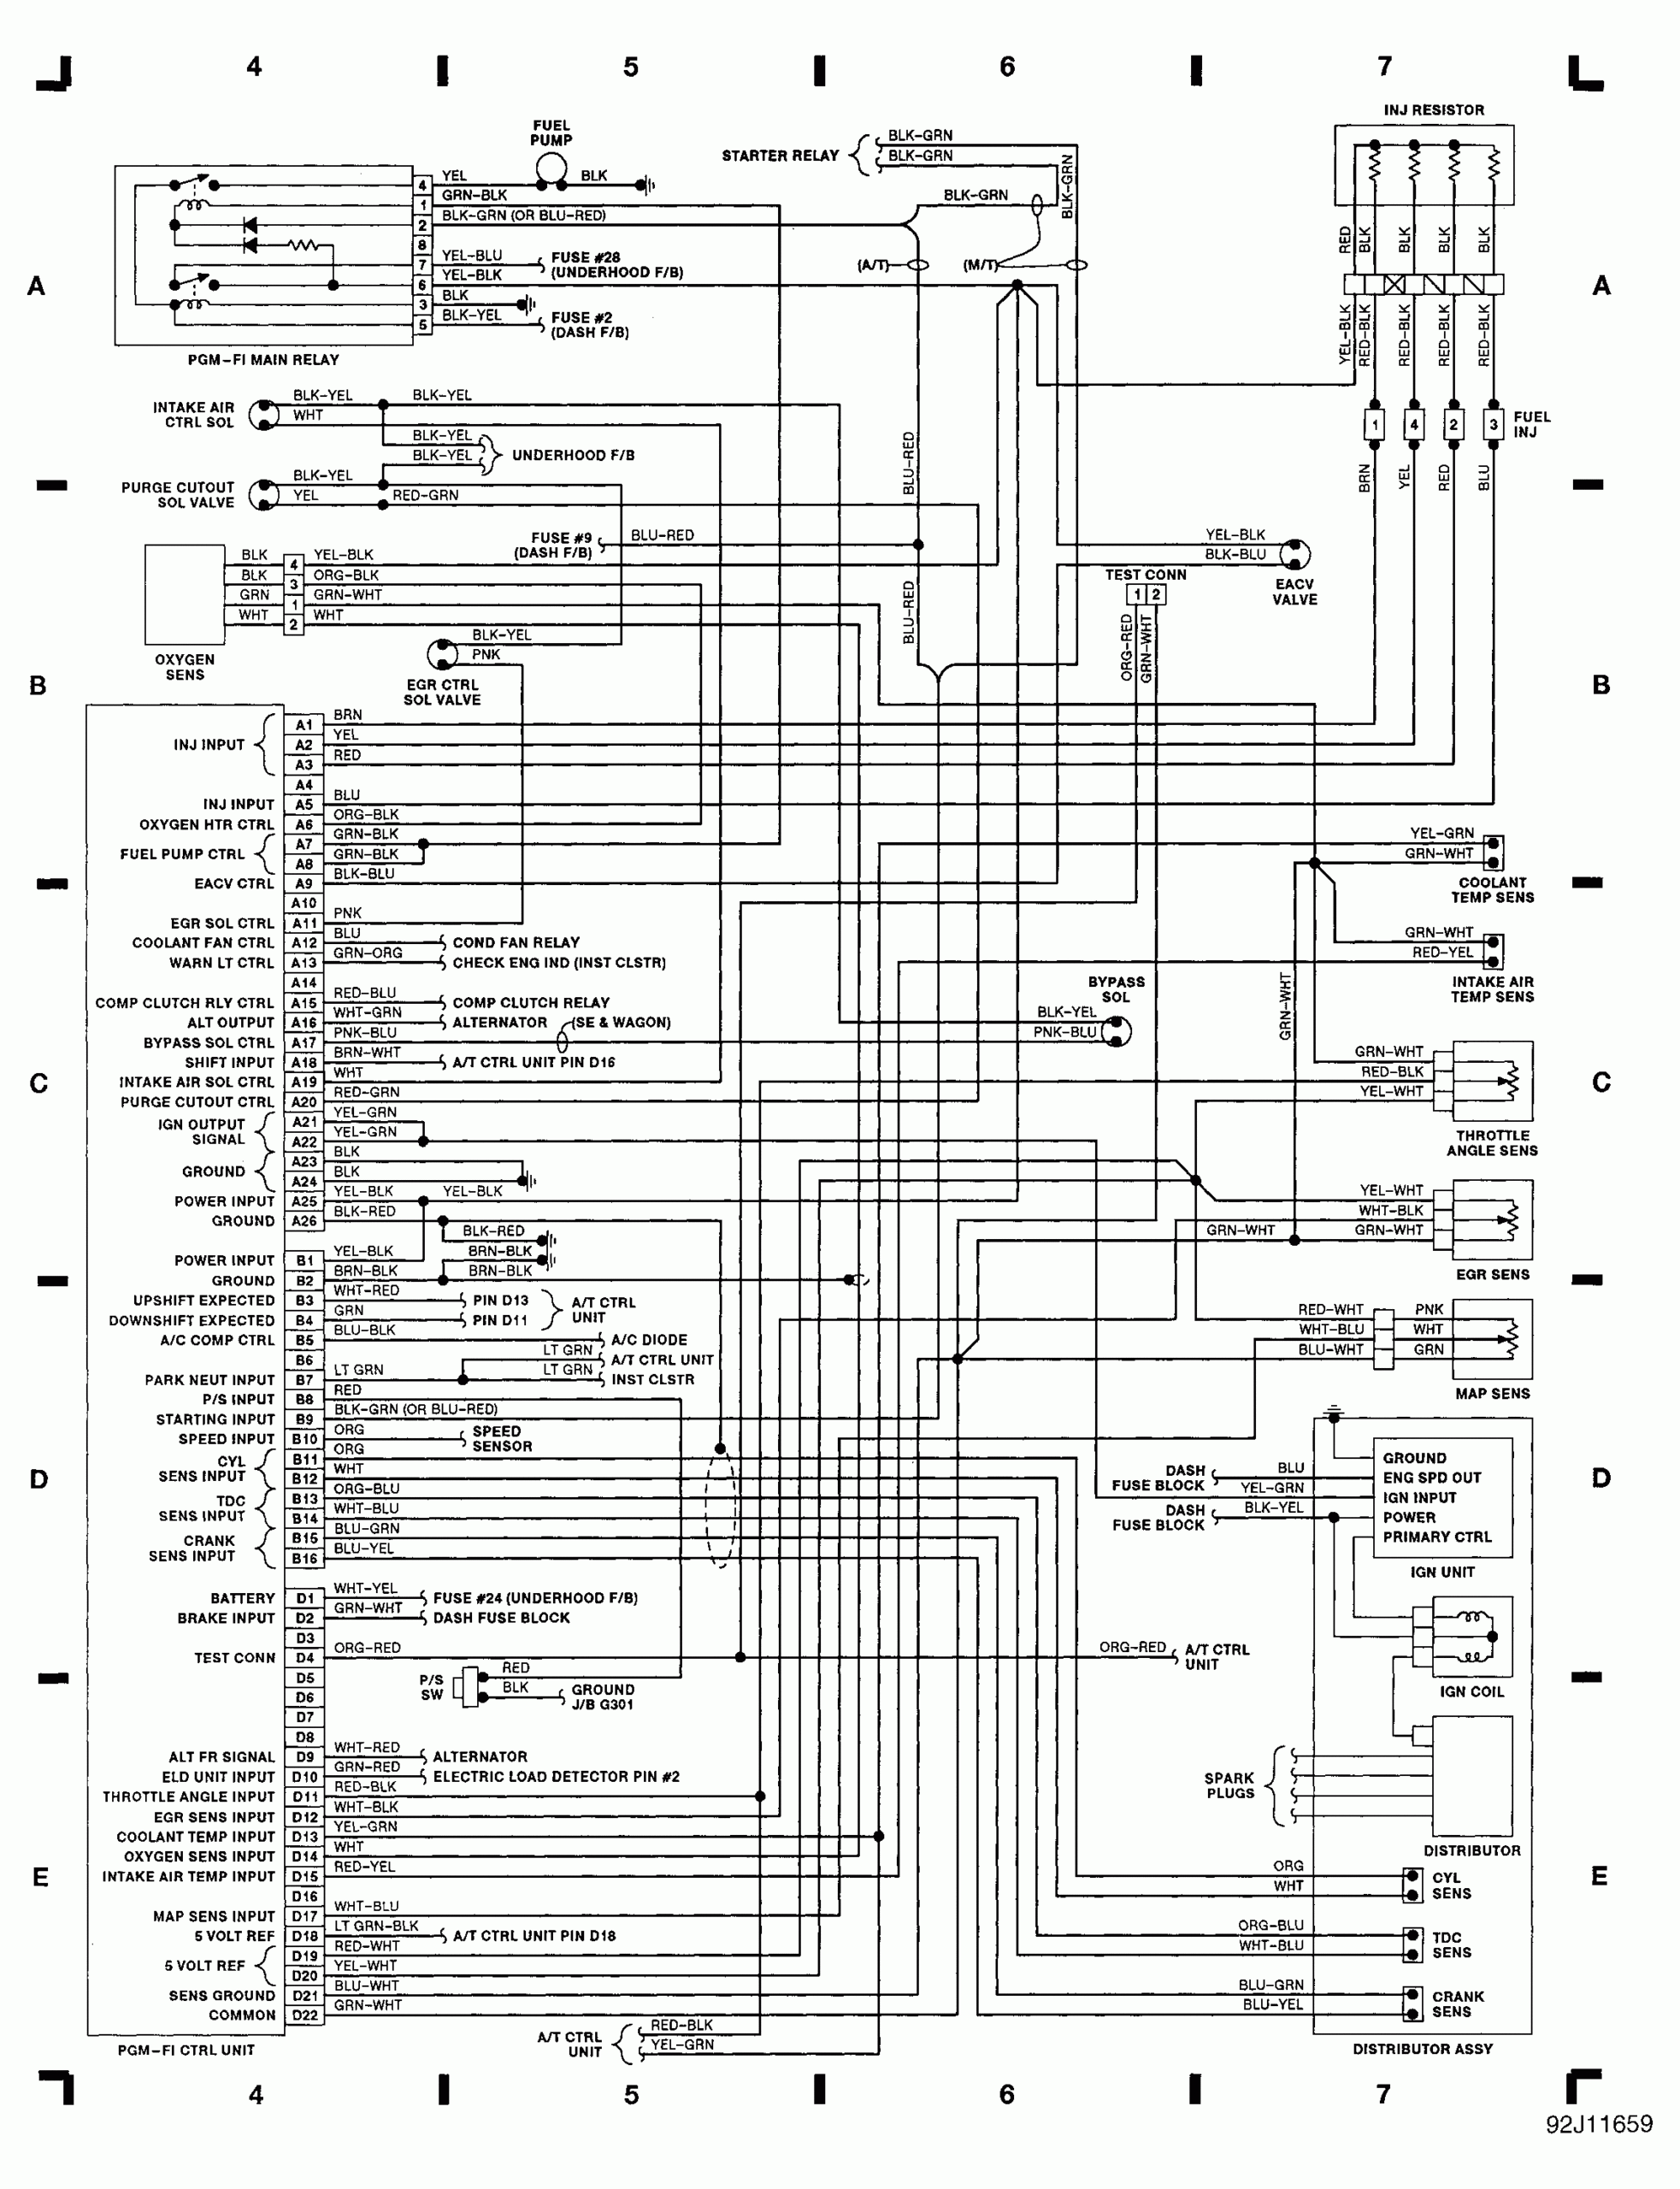 Distributor I Need A Engine Wiring Diagram For Honda Accord 1991